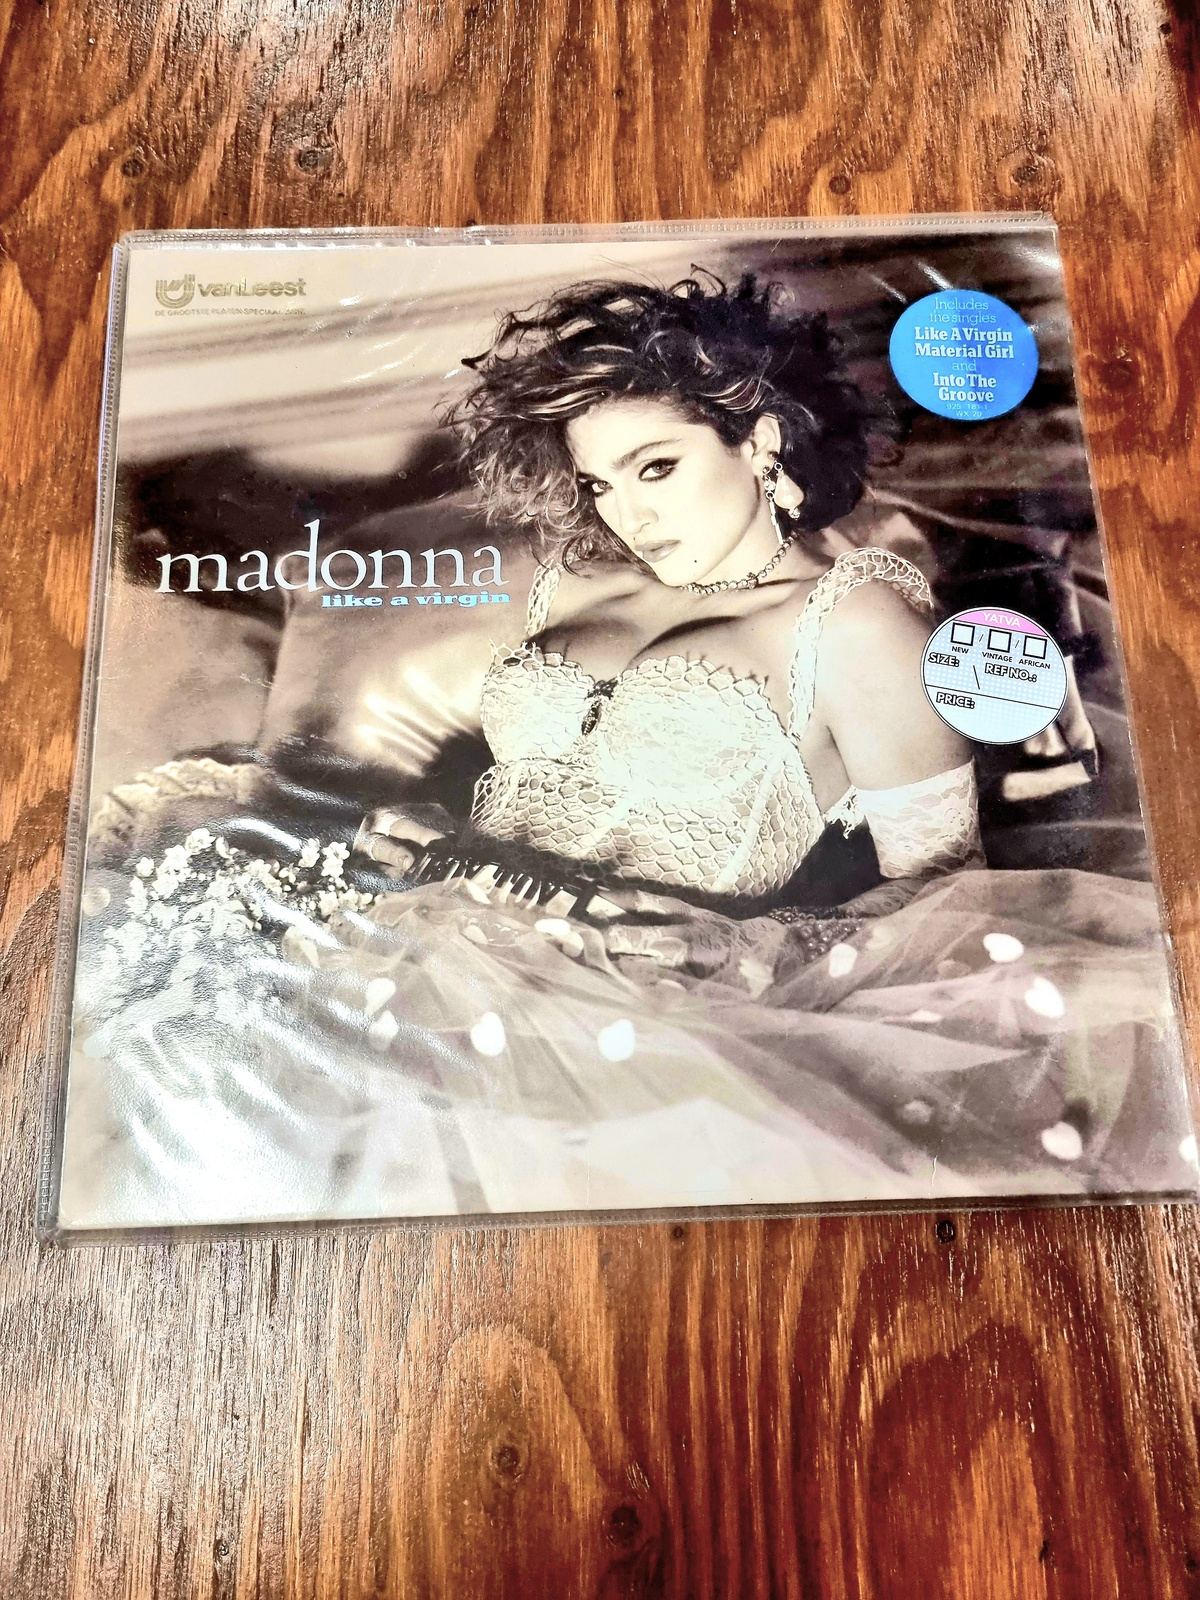 Madonna – Like A Virgin